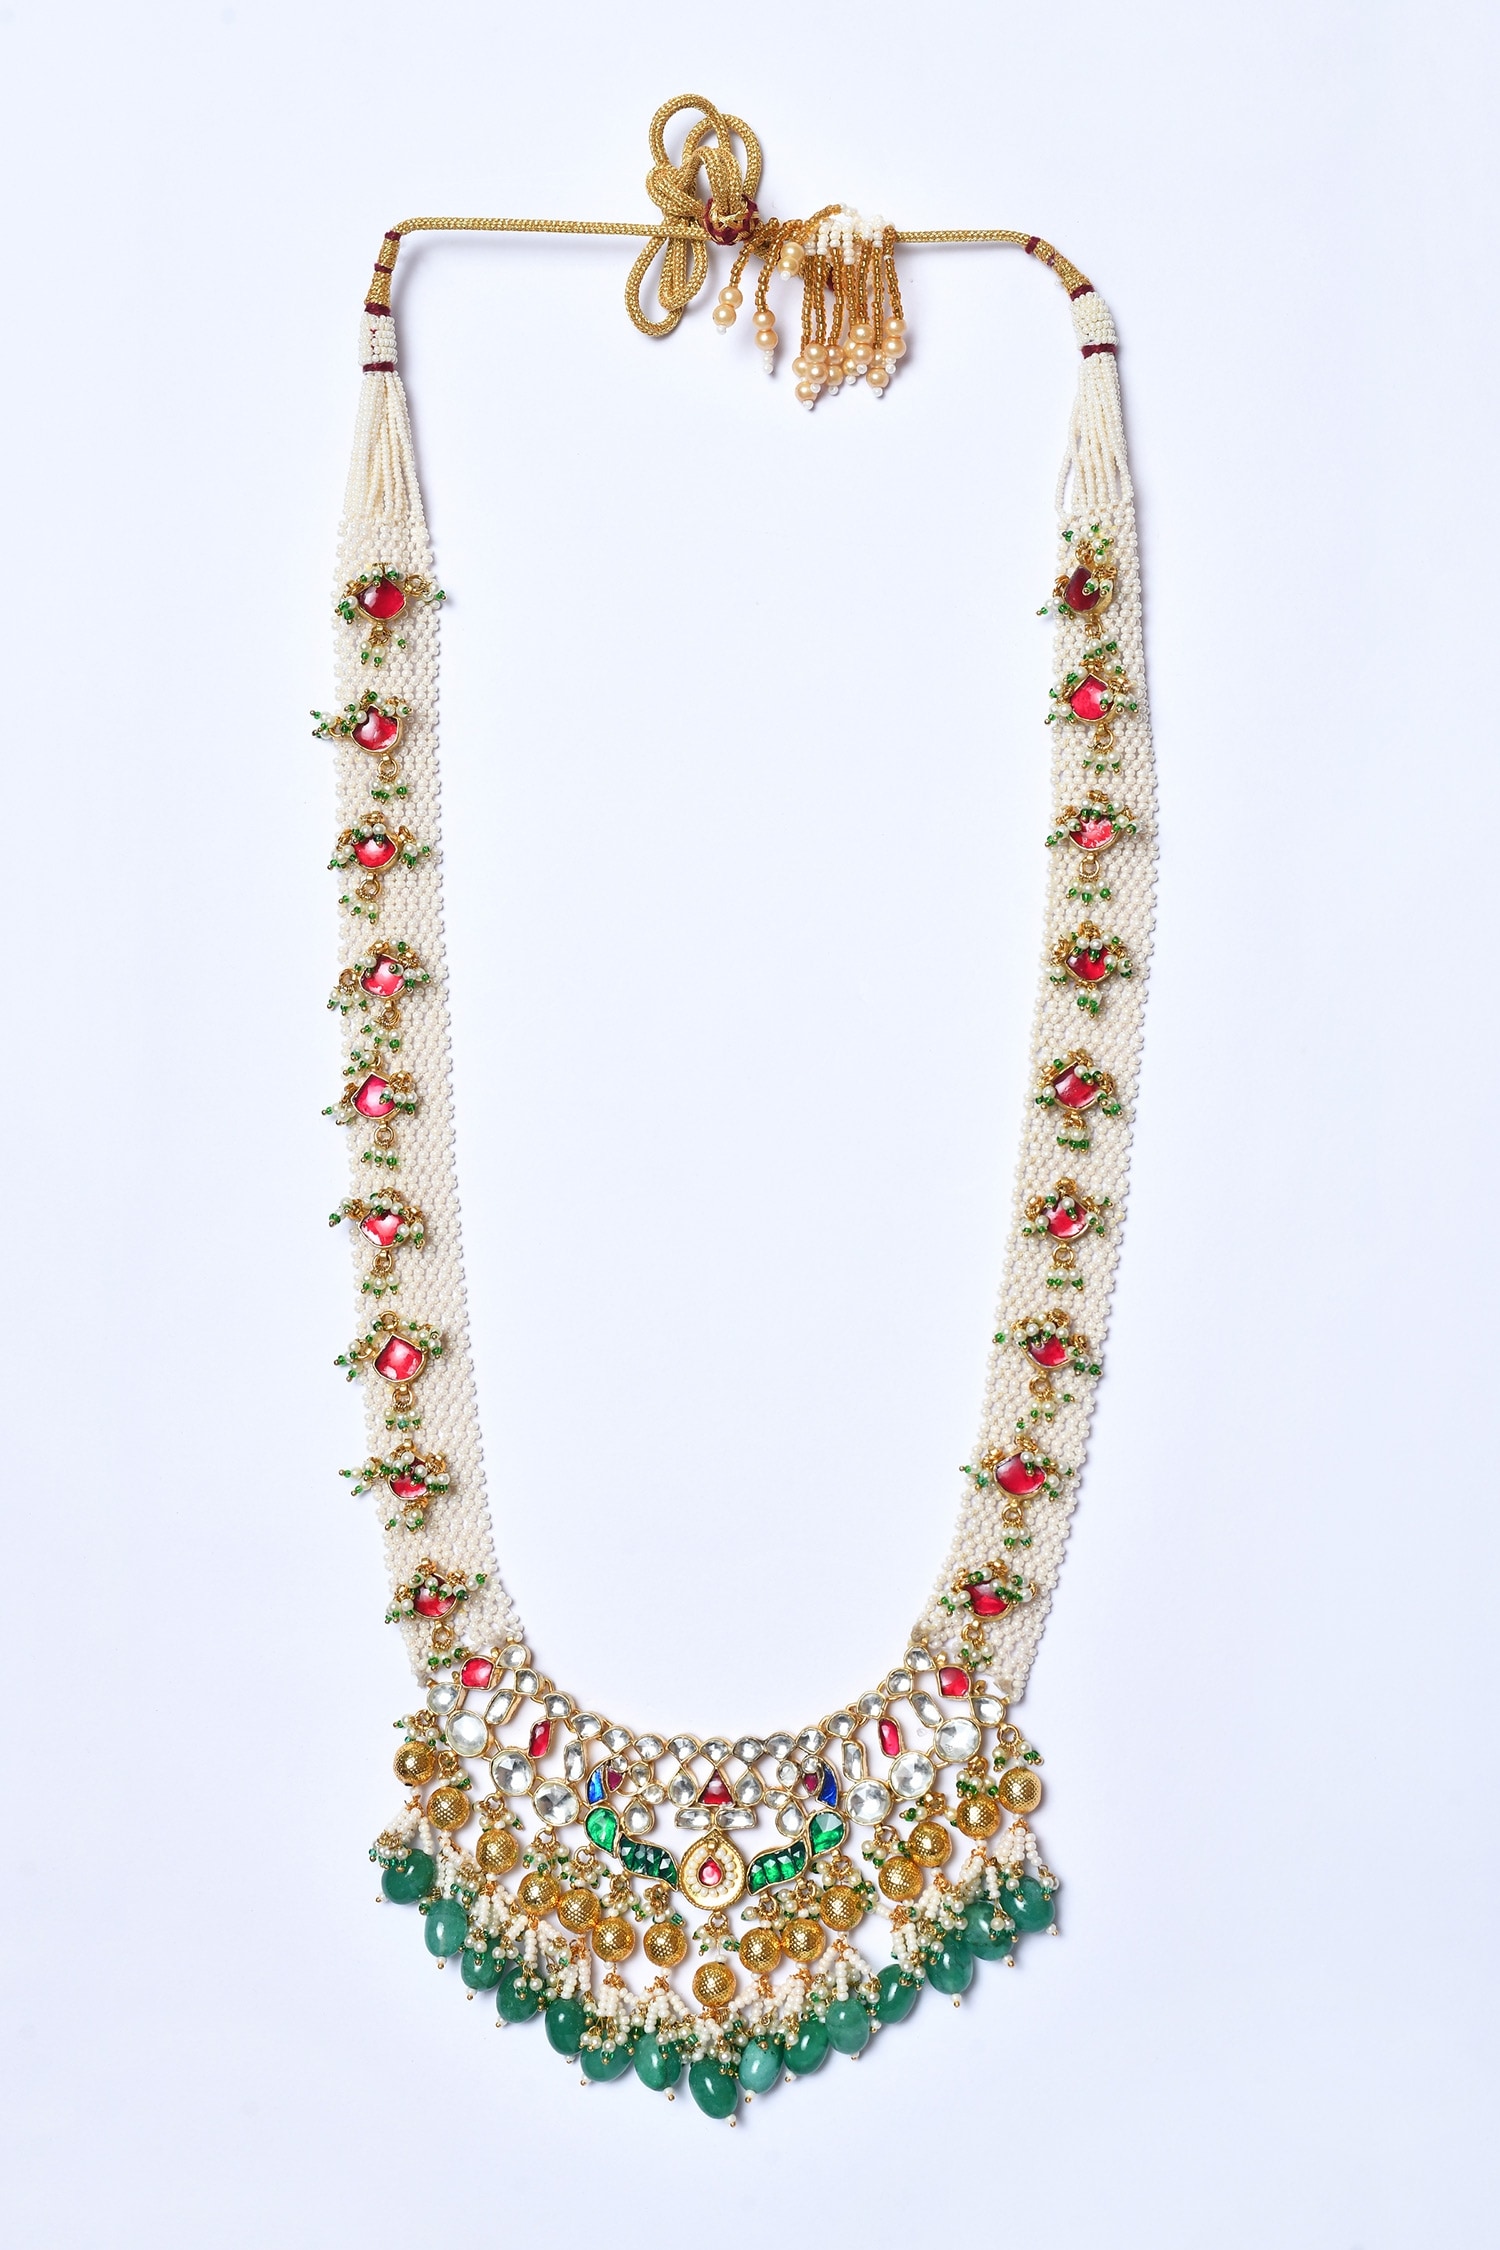 Marvelous Design One Side Pendal Long Necklace Set, अर्टिफिशियल नेकलैस सेट  - Lookethnic Handicrafts LLP, Mumbai